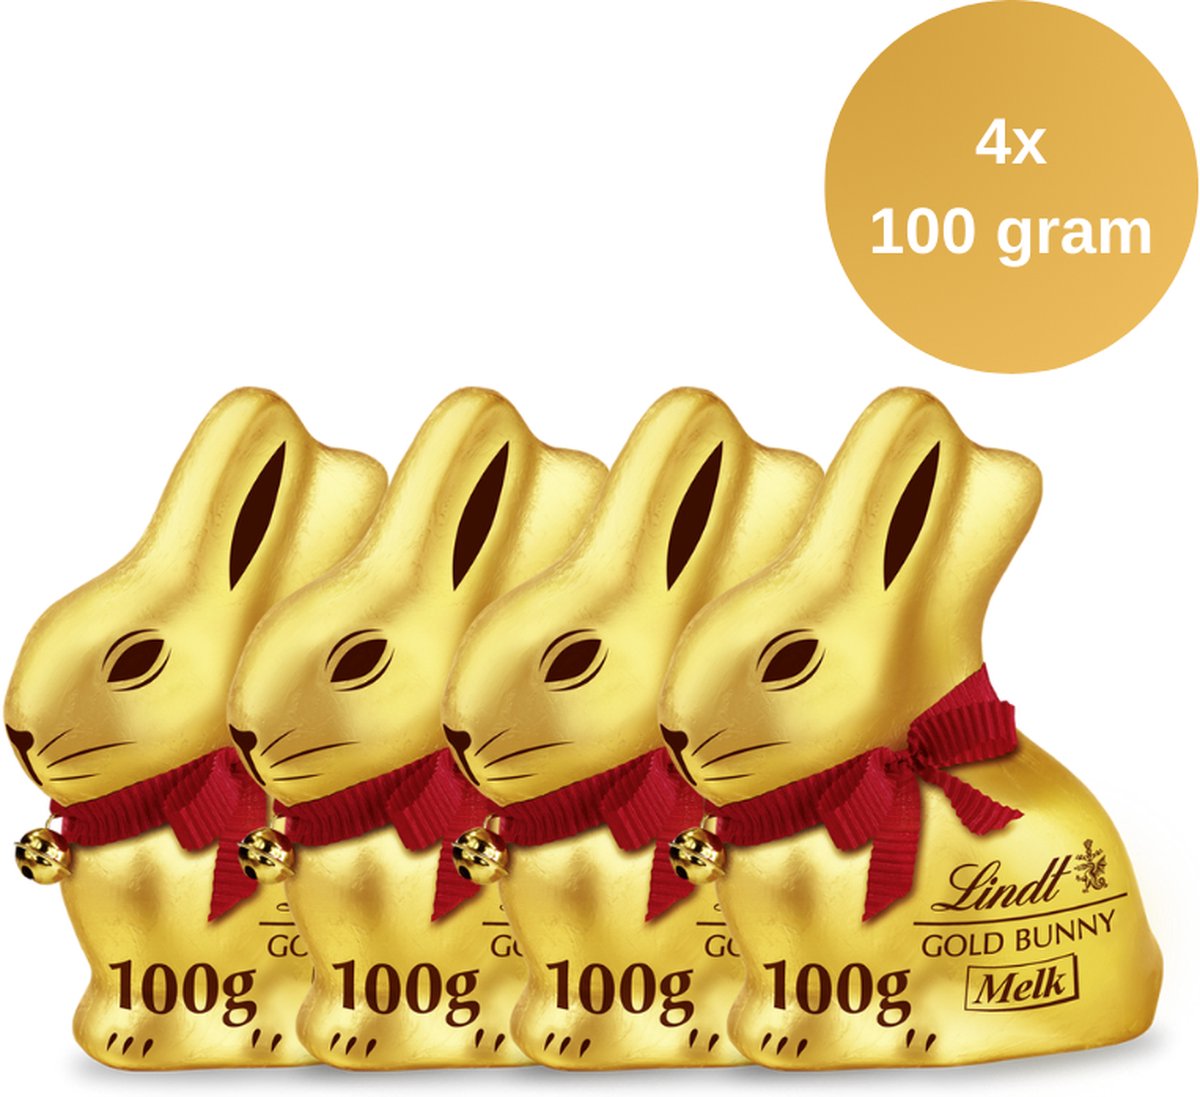 Lindt GOLD BUNNY 4x100 gram Multi-Pack - Melkchocolade Paashaas - Pasen Chocolade - Pasen Cadeau - Lindt